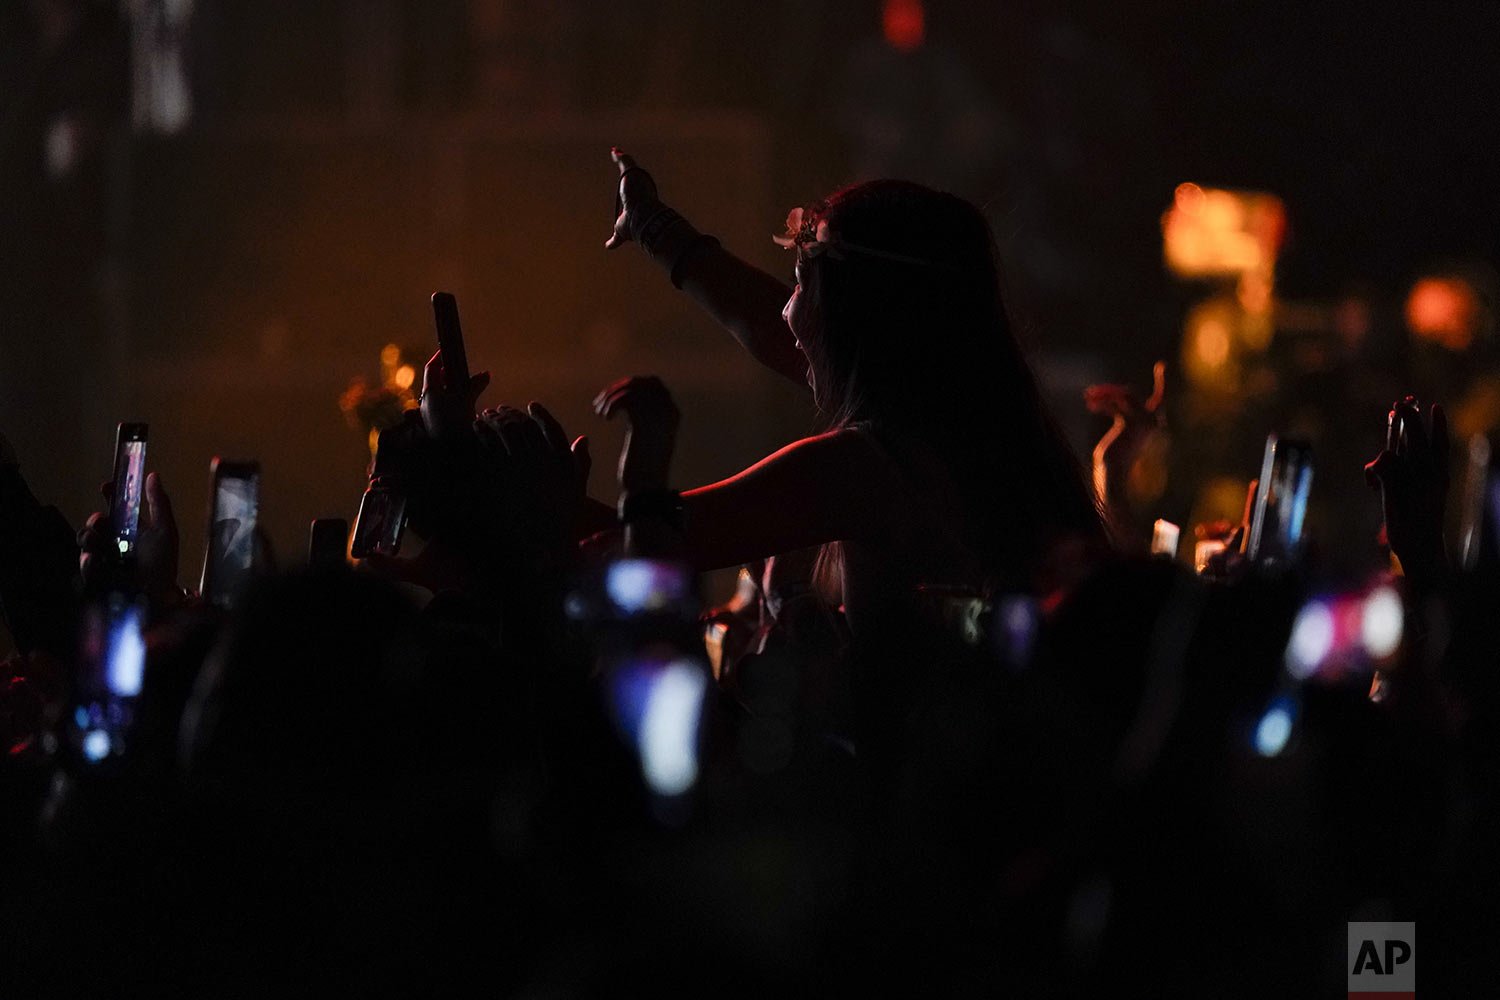  Fans takes pictures of American singer Laura Pergolizzi, aka as LP,  as she performs at the Corona Capital music festival in Mexico City, Nov. 20, 2021.  (AP Photo/Eduardo Verdugo) 